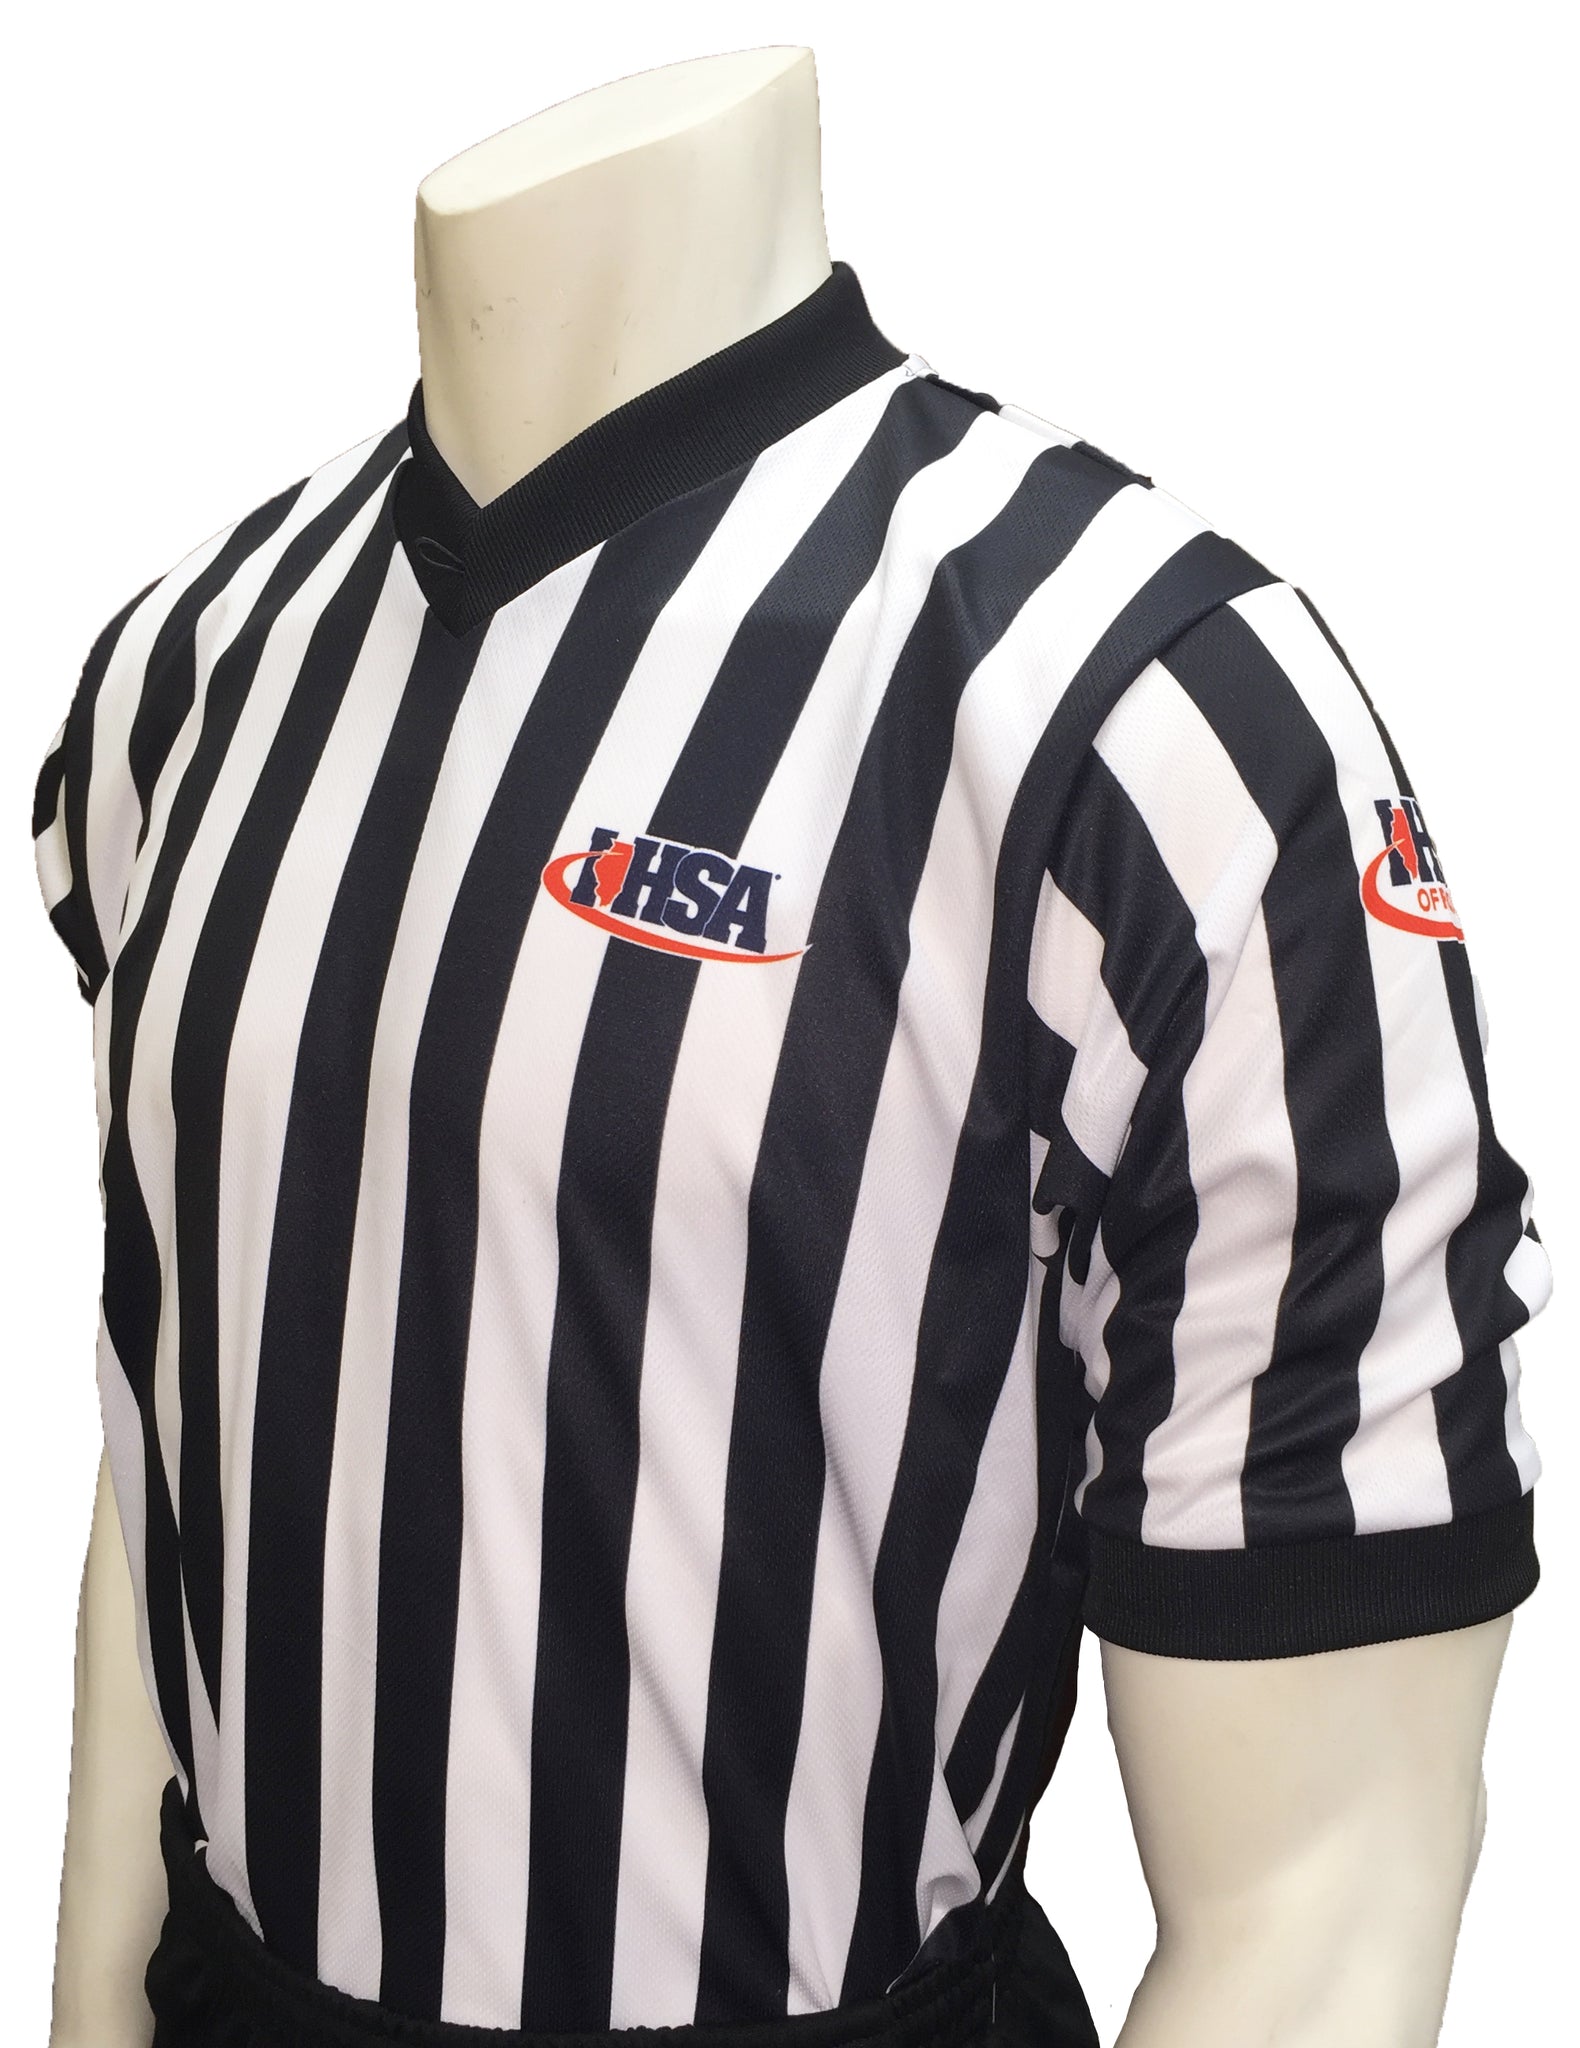 USA200IL-607 - Smitty "Made in USA" - "BODY FLEX" Basketball Men's Short Sleeve Shirt